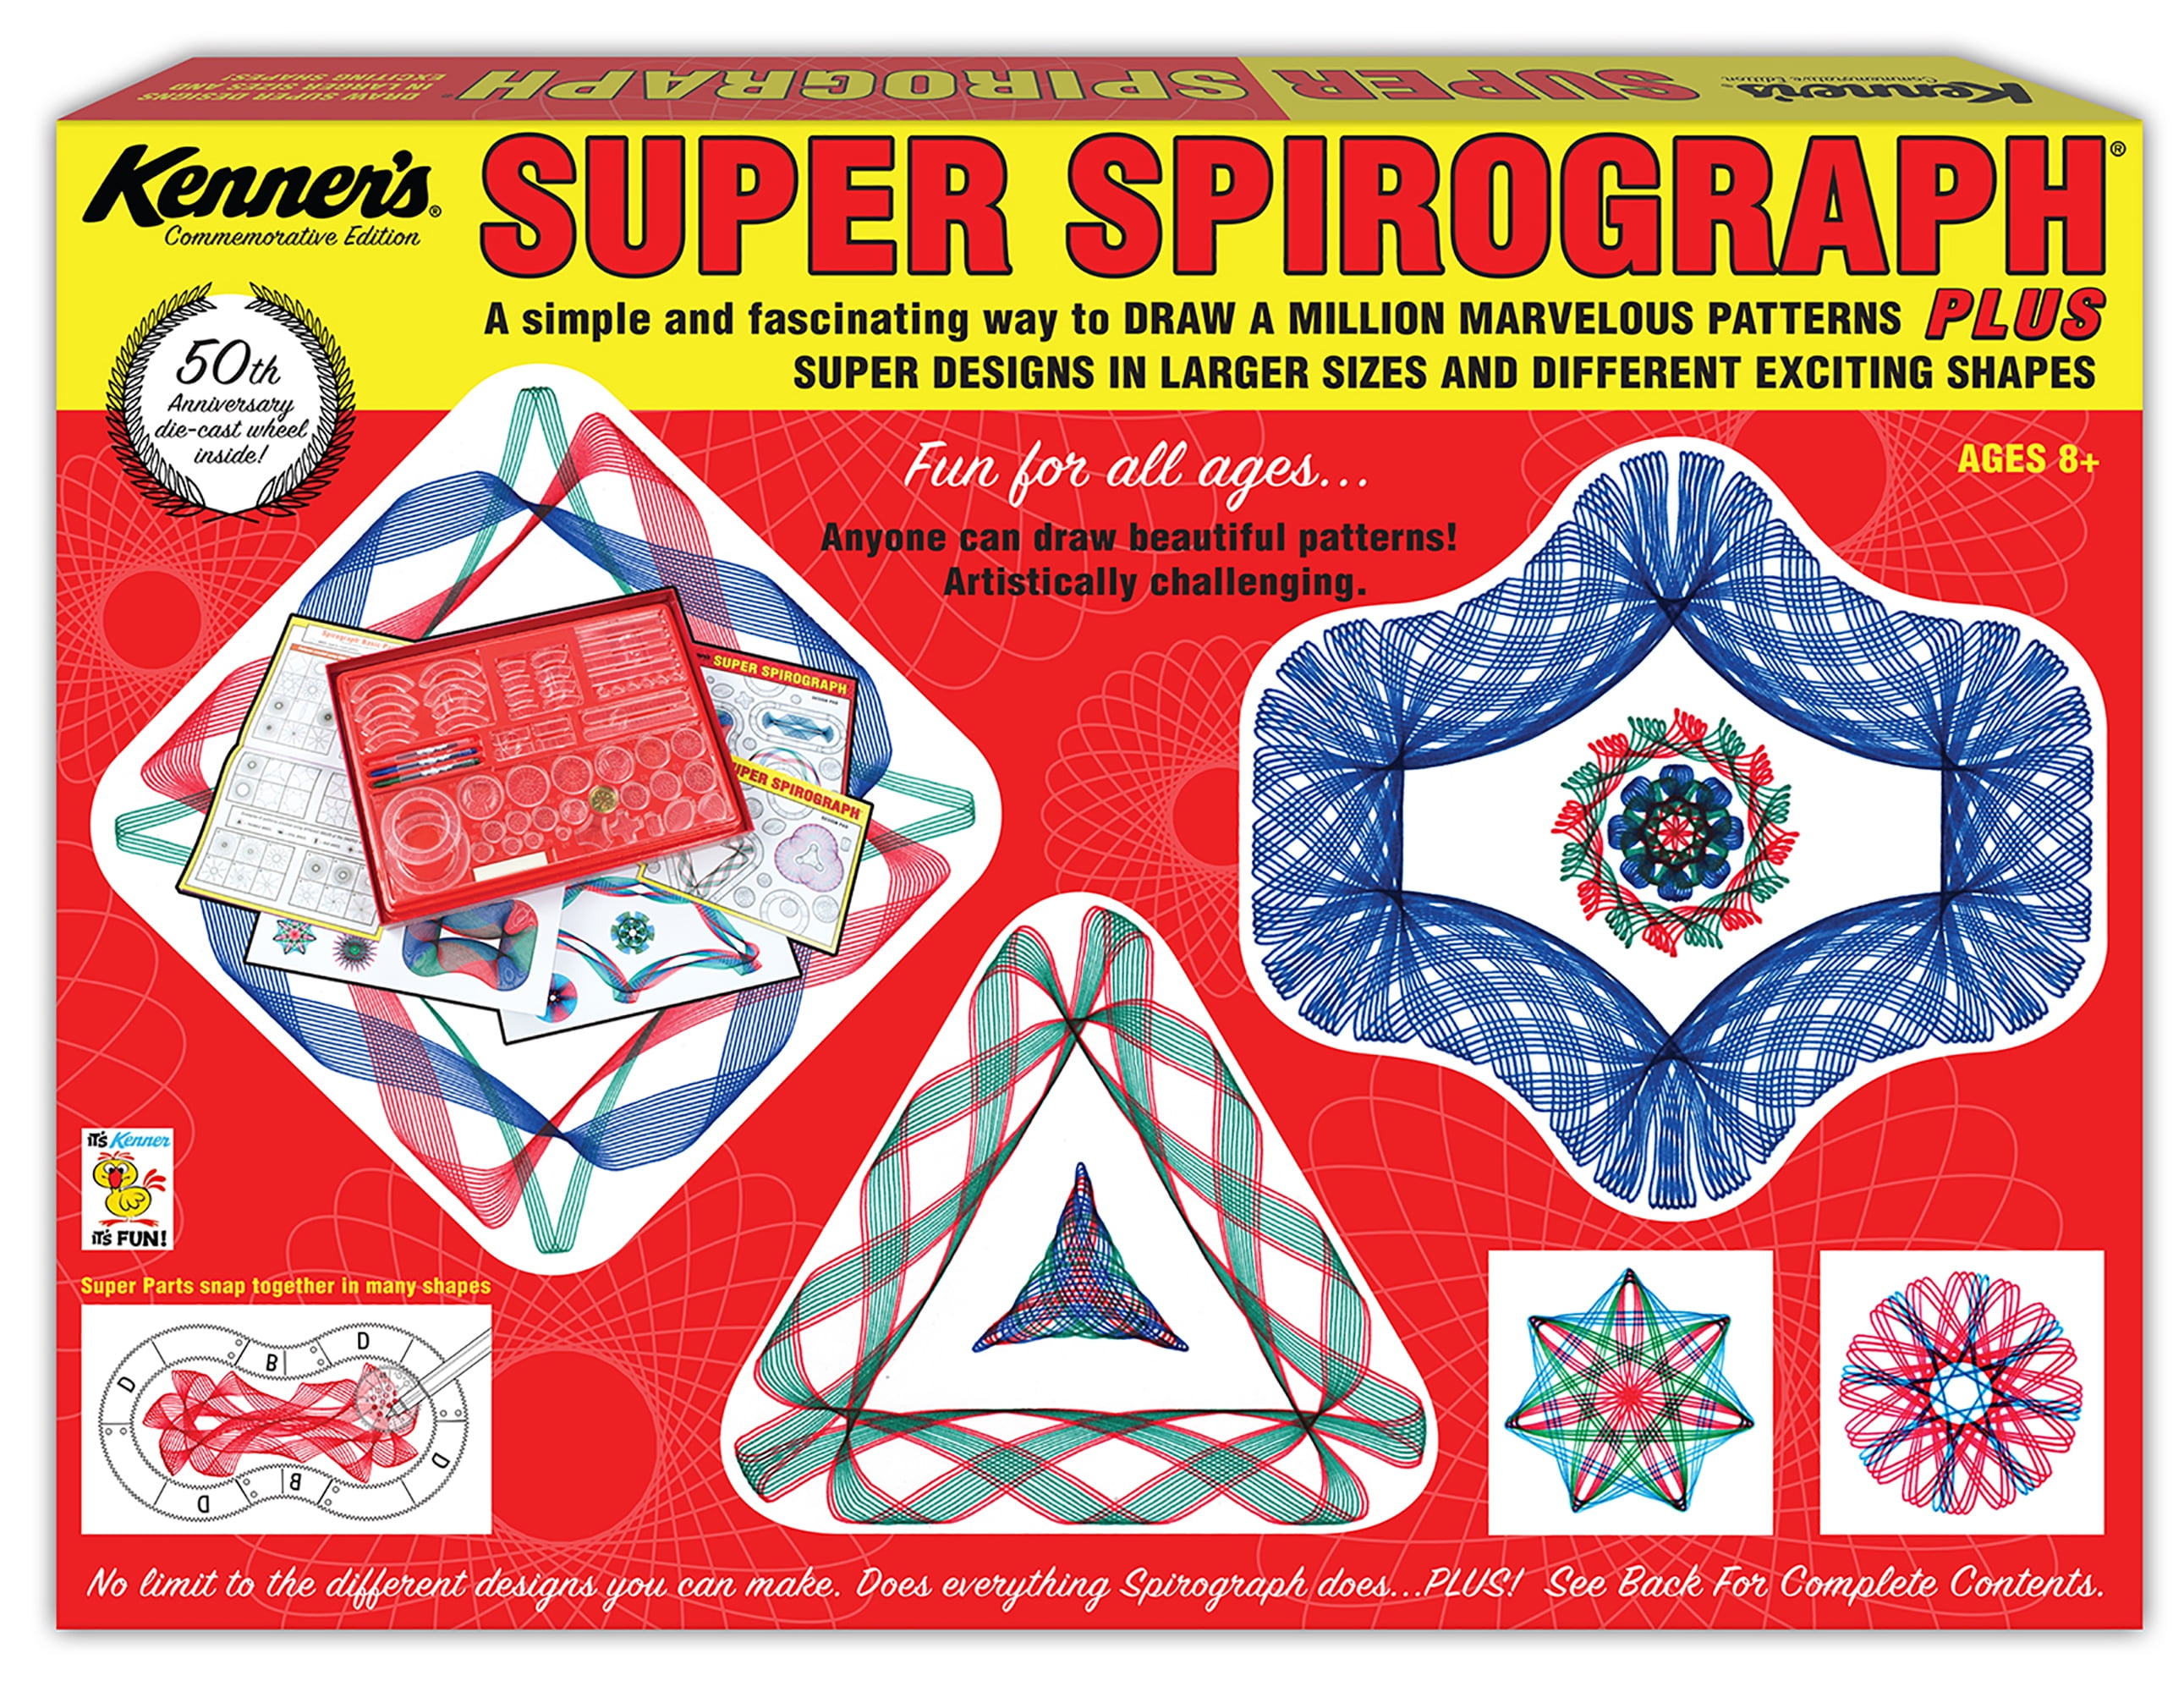 The Original Super Spirograph Design Set Kit 50th Anniversary Case Toy Ship for sale online 